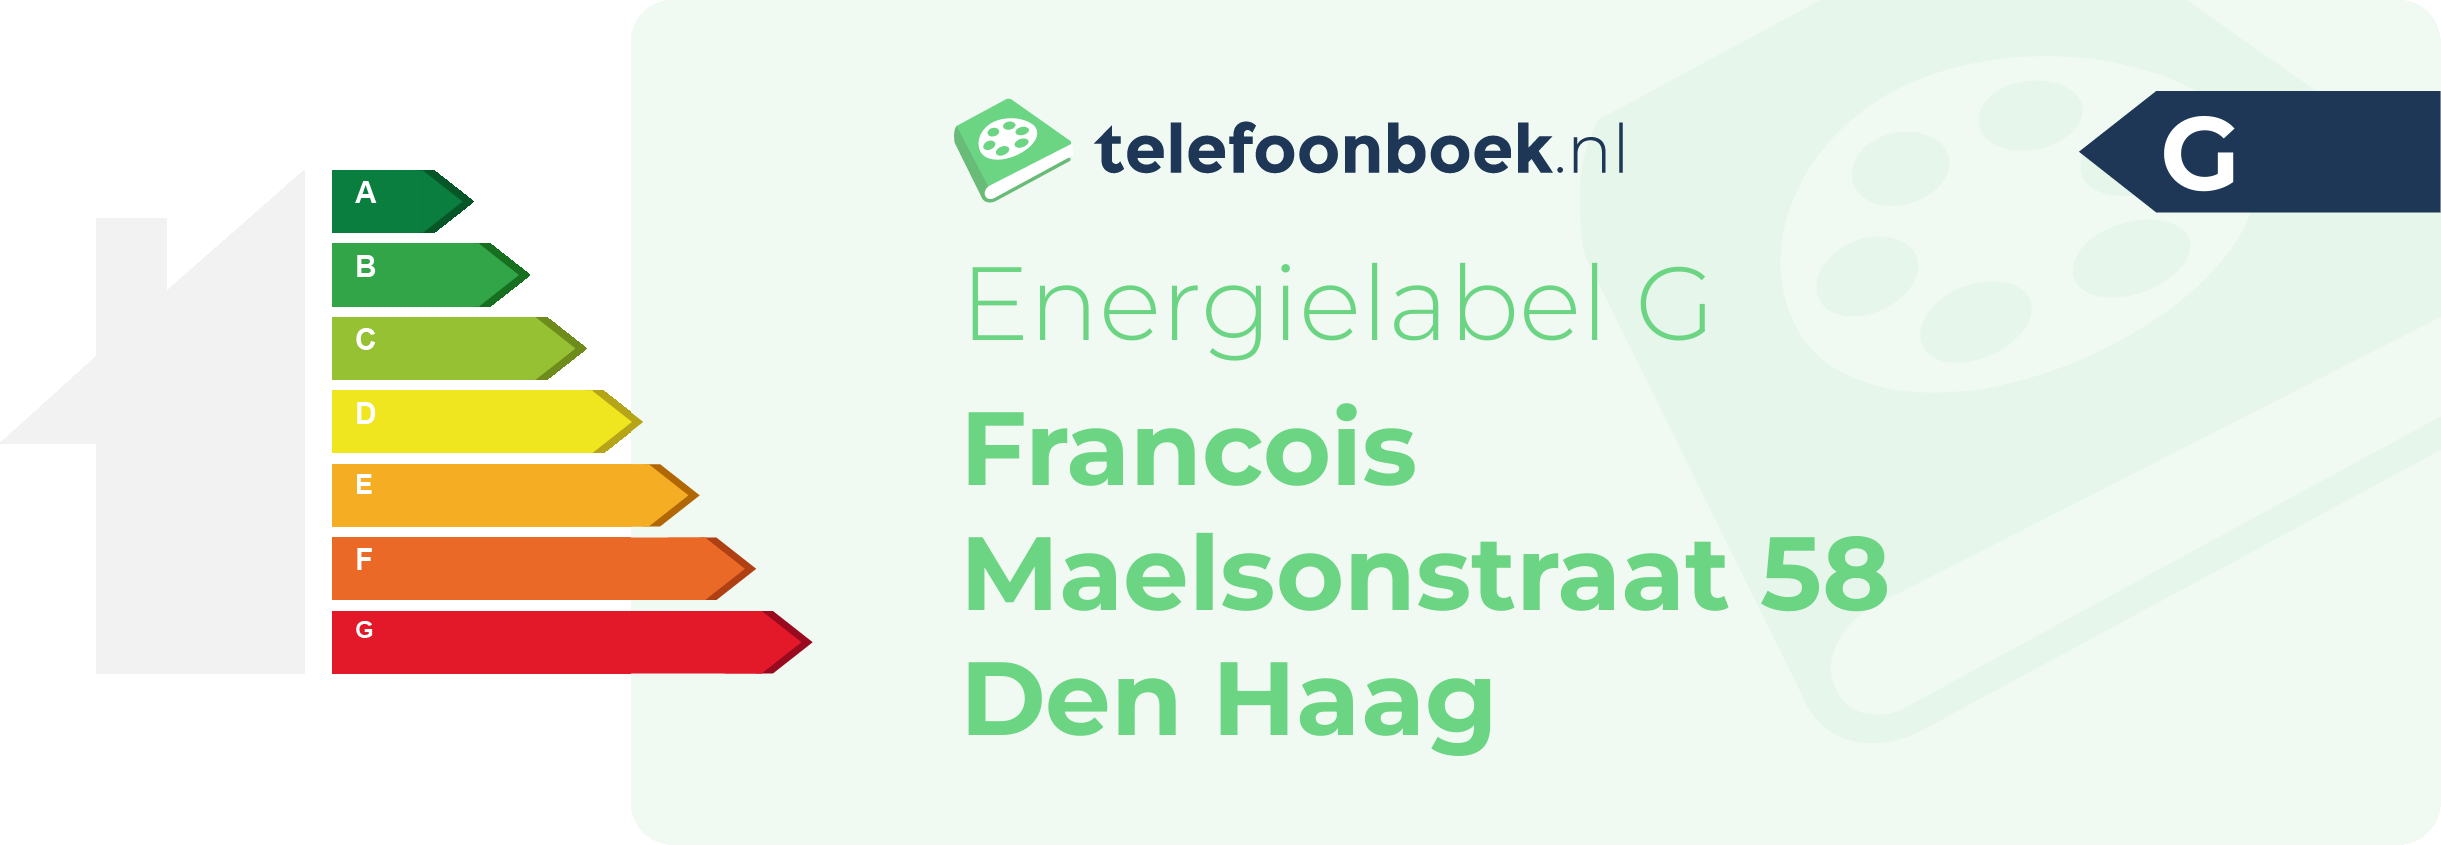 Energielabel Francois Maelsonstraat 58 Den Haag